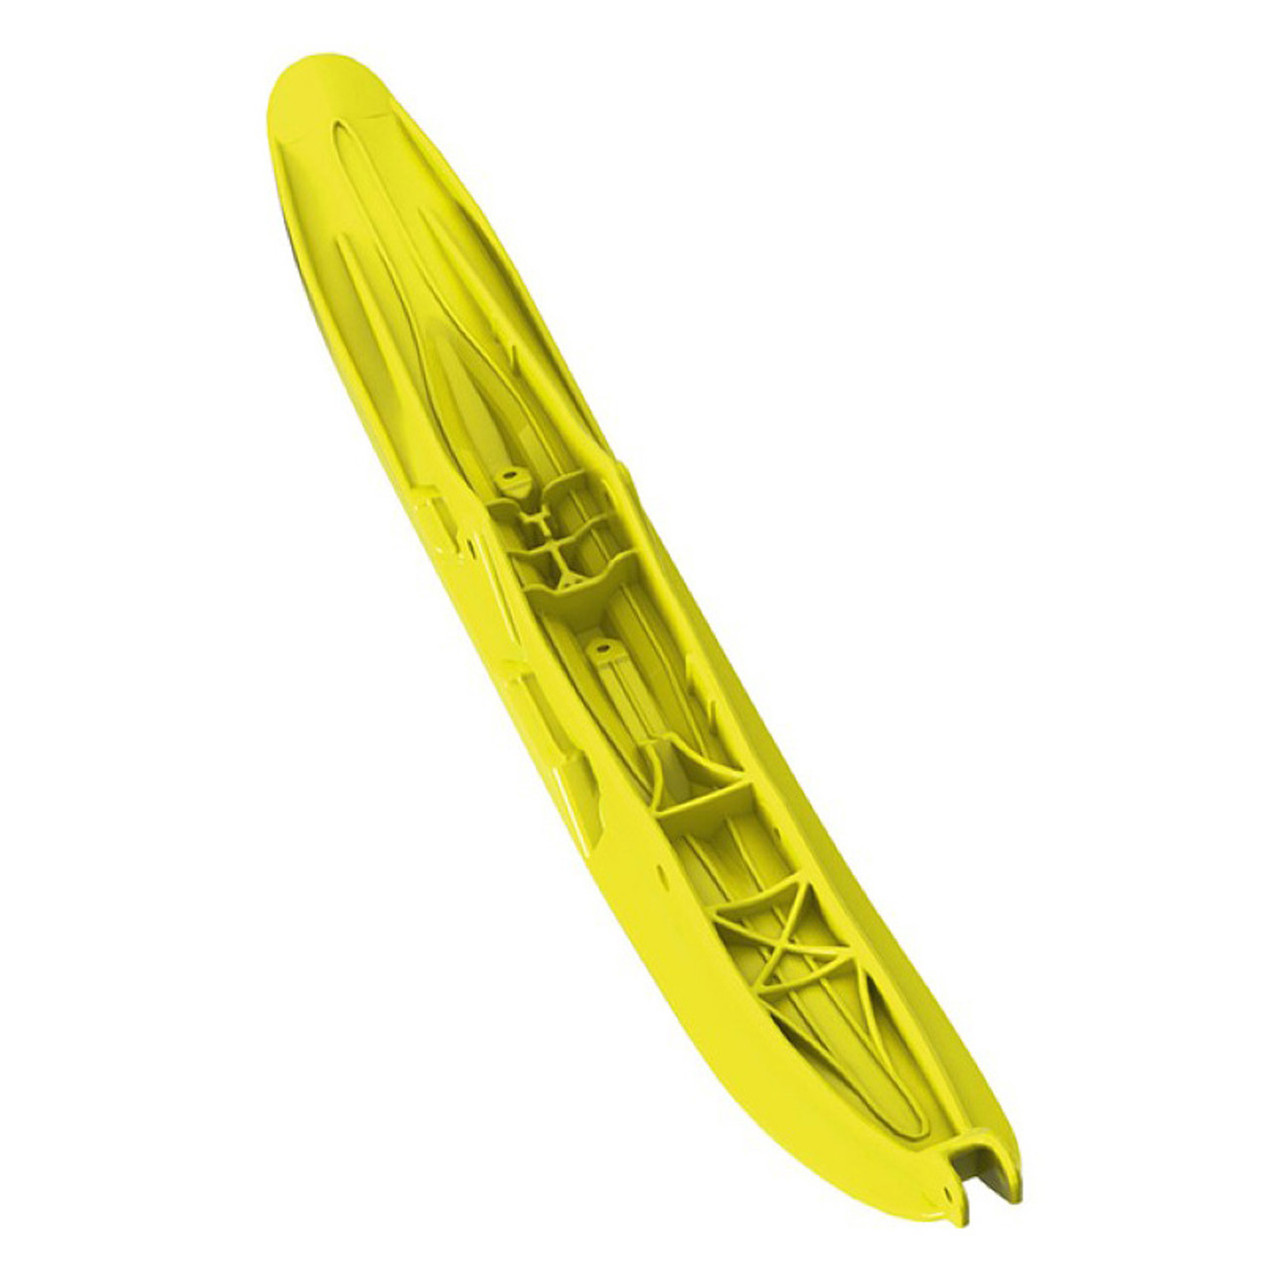 Ski-Doo New OEM Pilot 5.7 RH Ski, Sunburst Yellow REV-XP/R/U/S/M 505073576